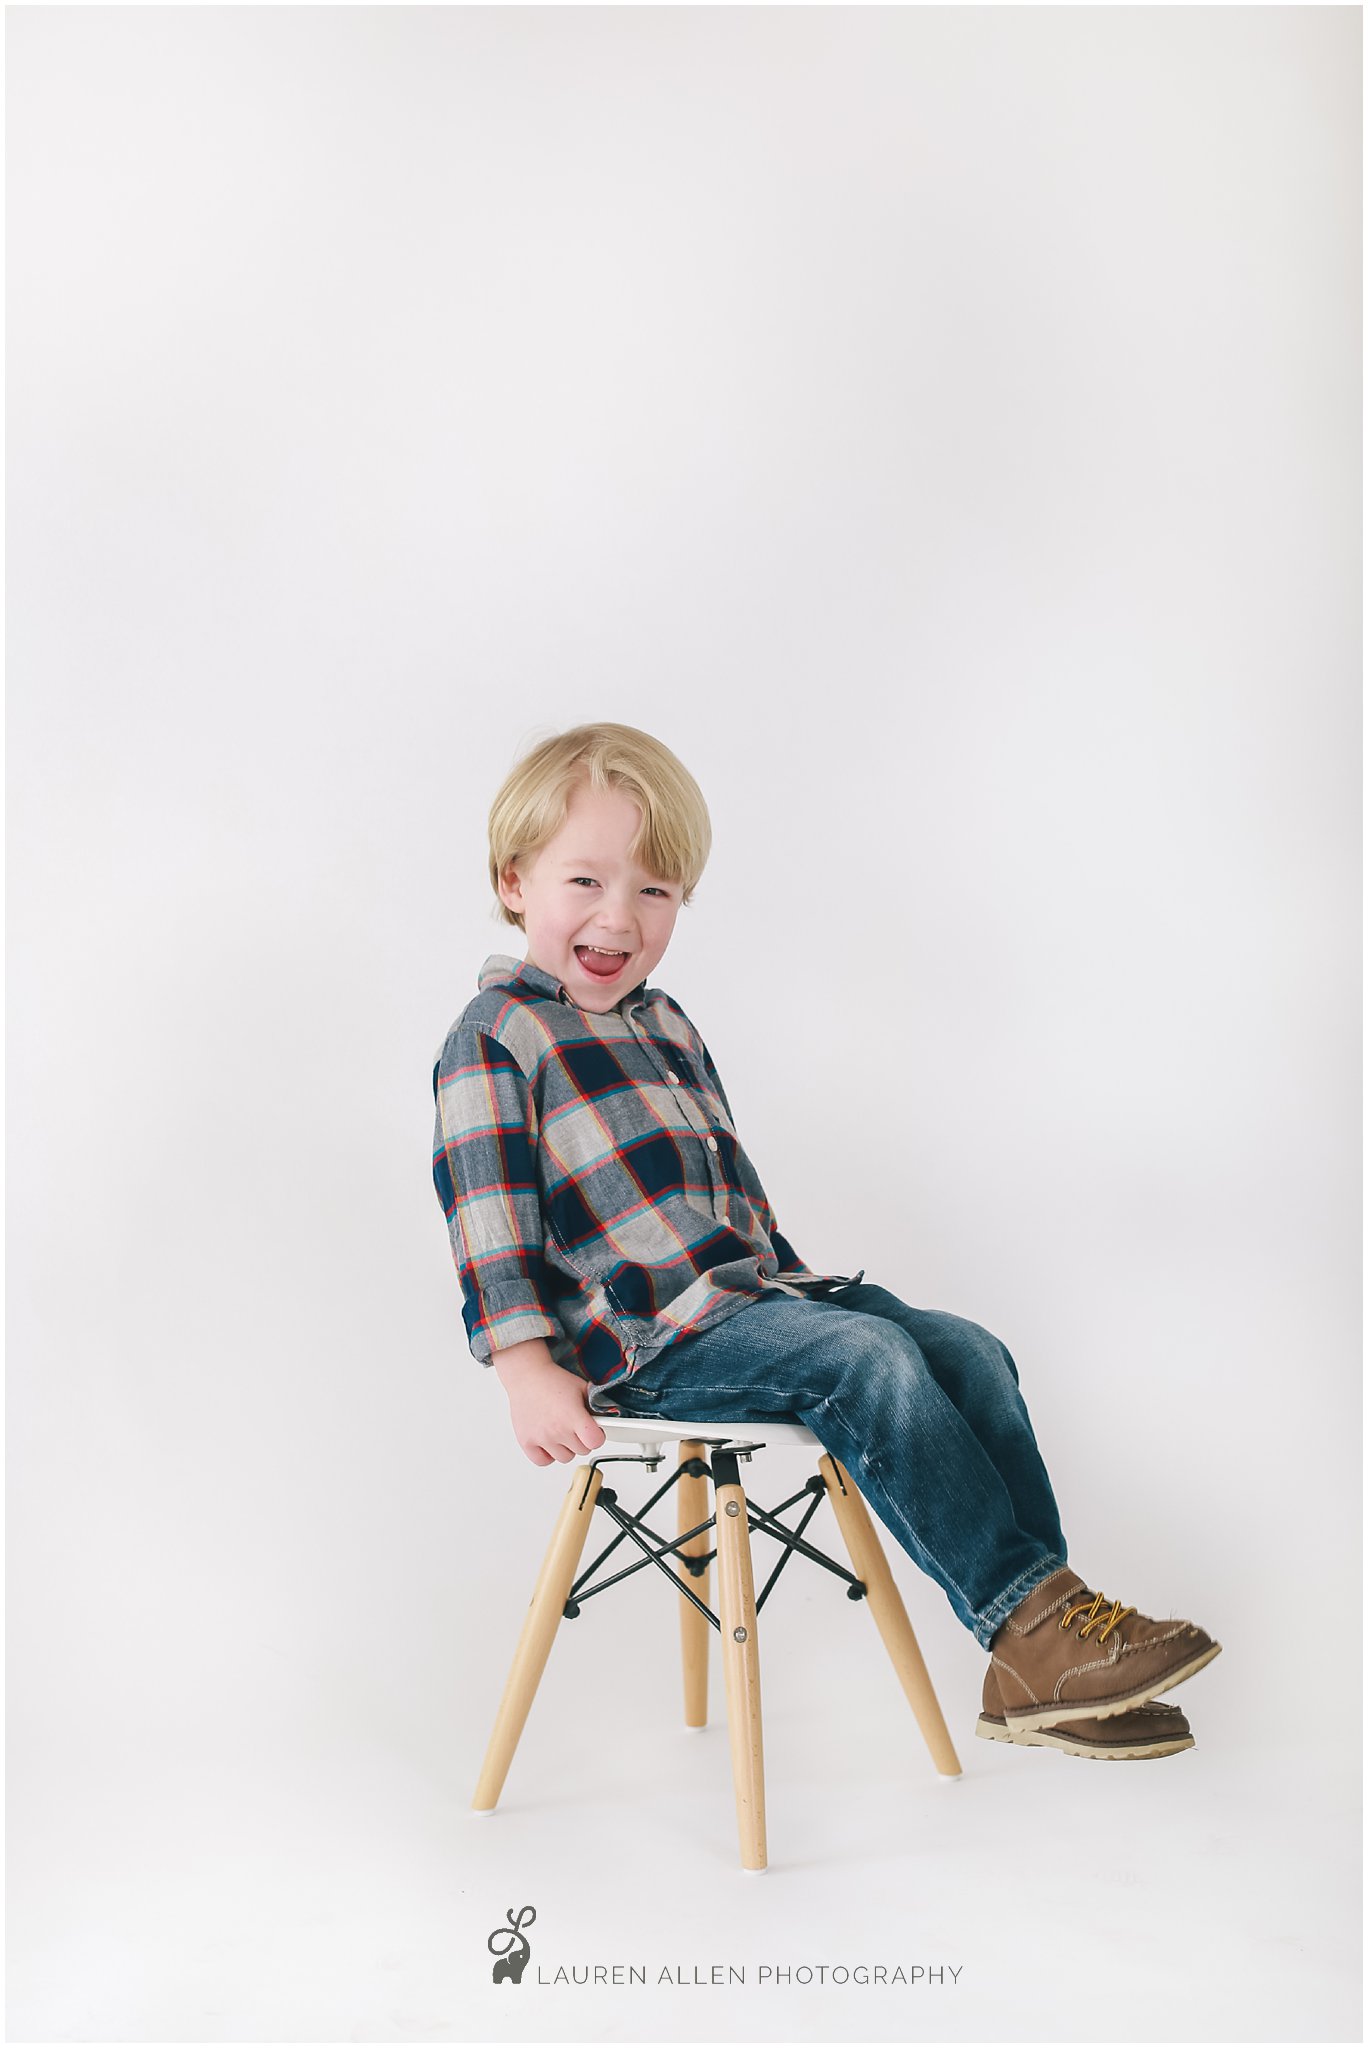 2017,4 years old,Boy,Brady,Children,Inside,Portrait,chair,child,gap,lake oswego,lake oswego studio,playing,strobes,studio,studio lights,white seamless,